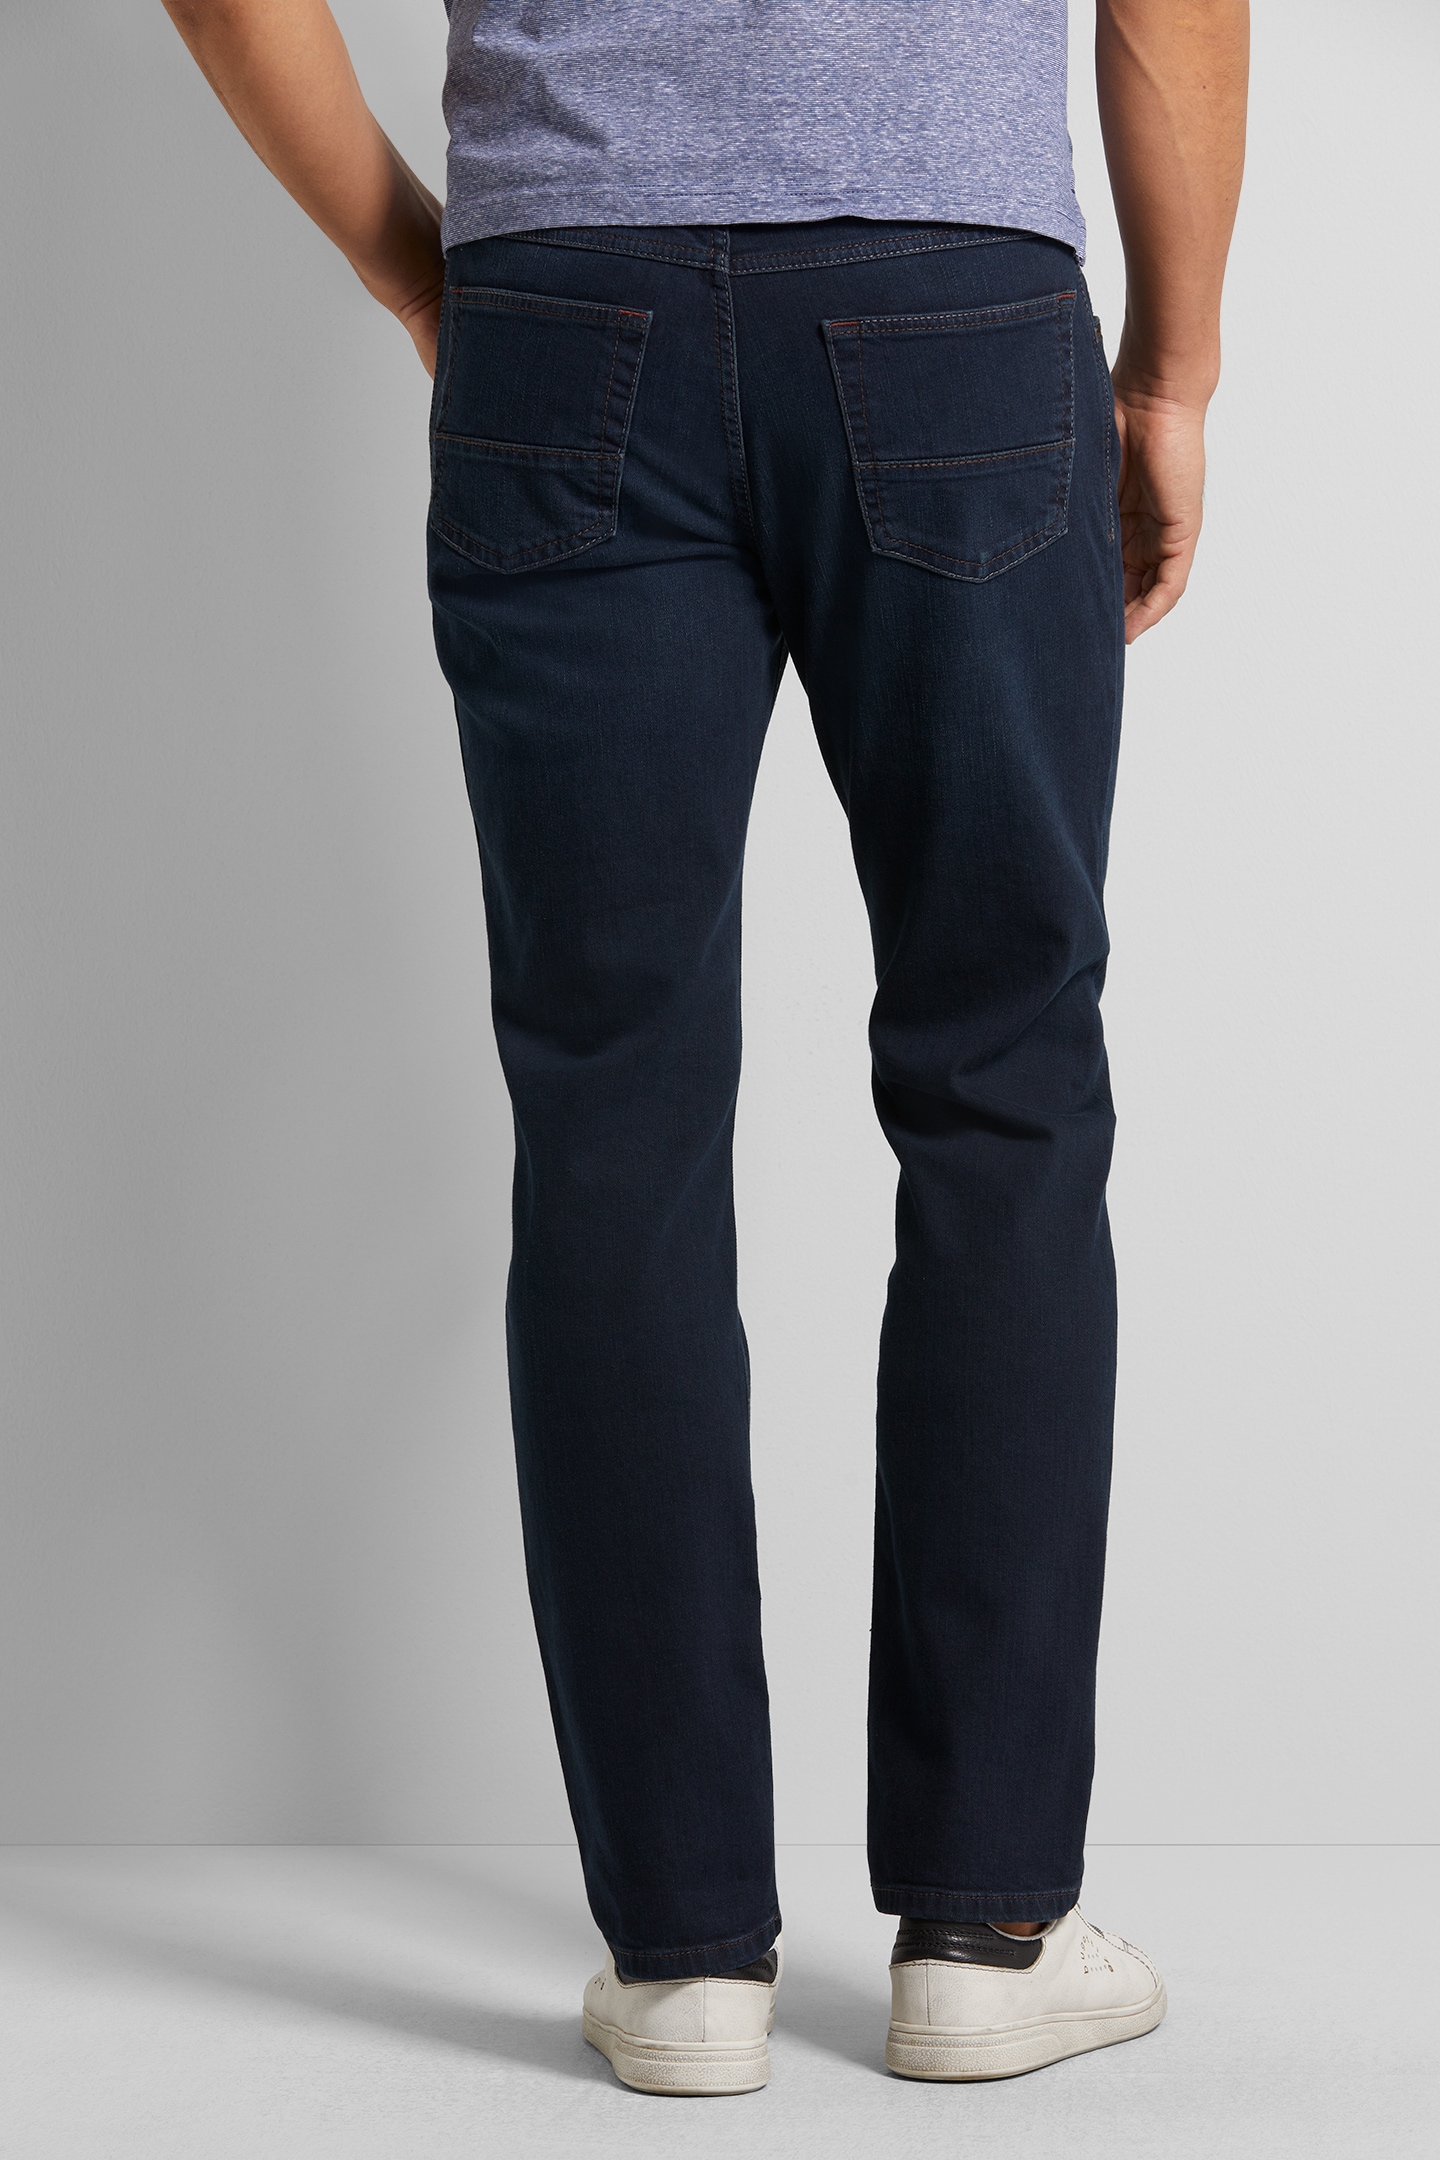 bugatti 5-Pocket-Jeans, mit Comfort Stretch